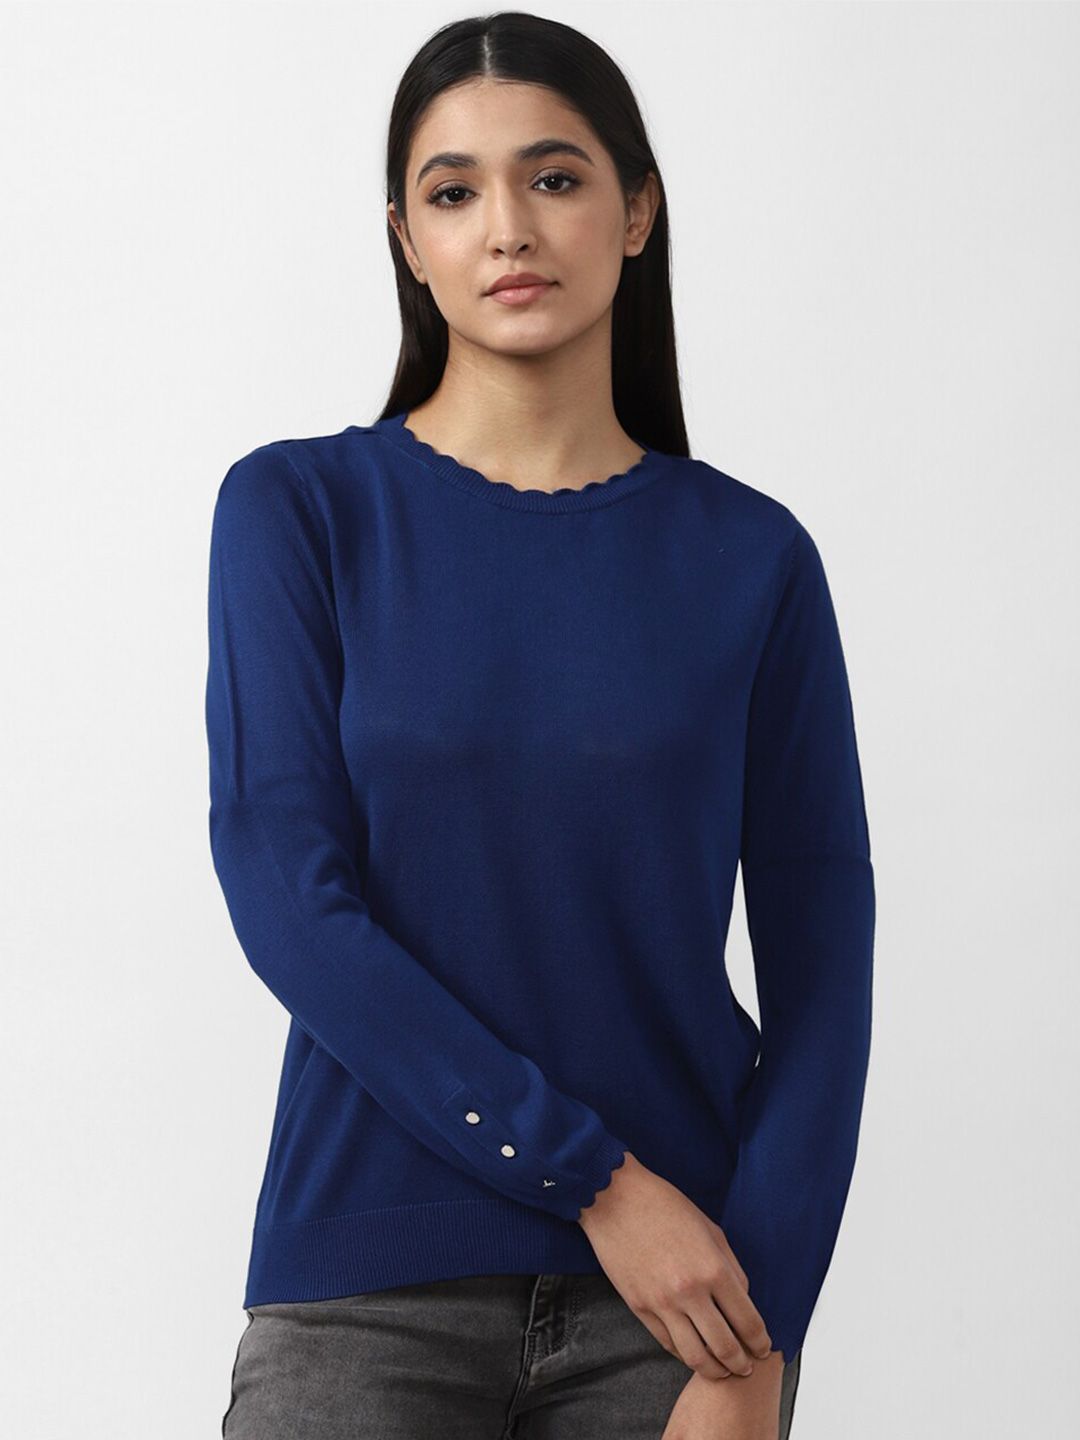 Van Heusen Woman Blue Round Neck Long Sleeves Top Price in India